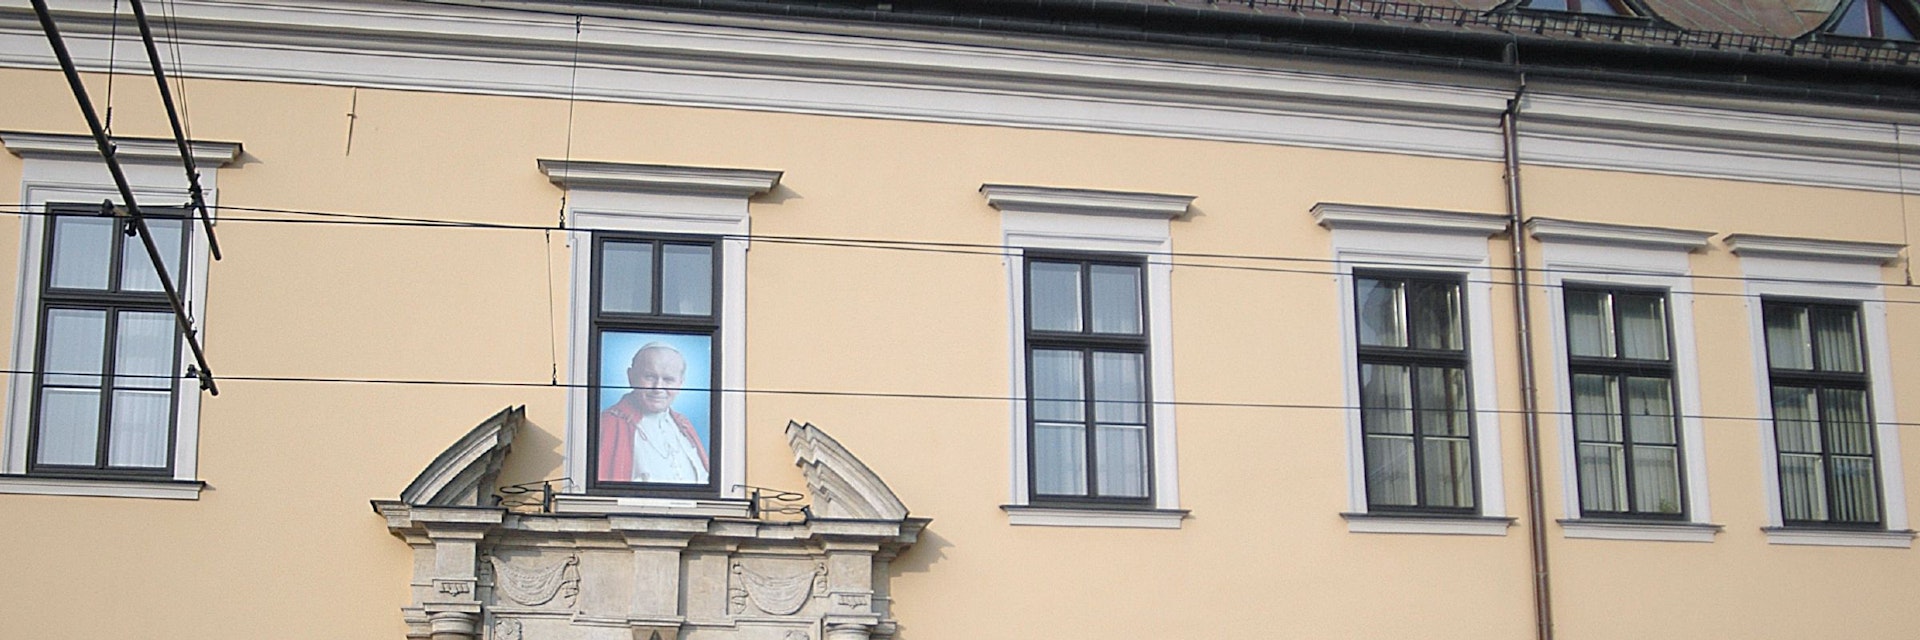 Papal Window